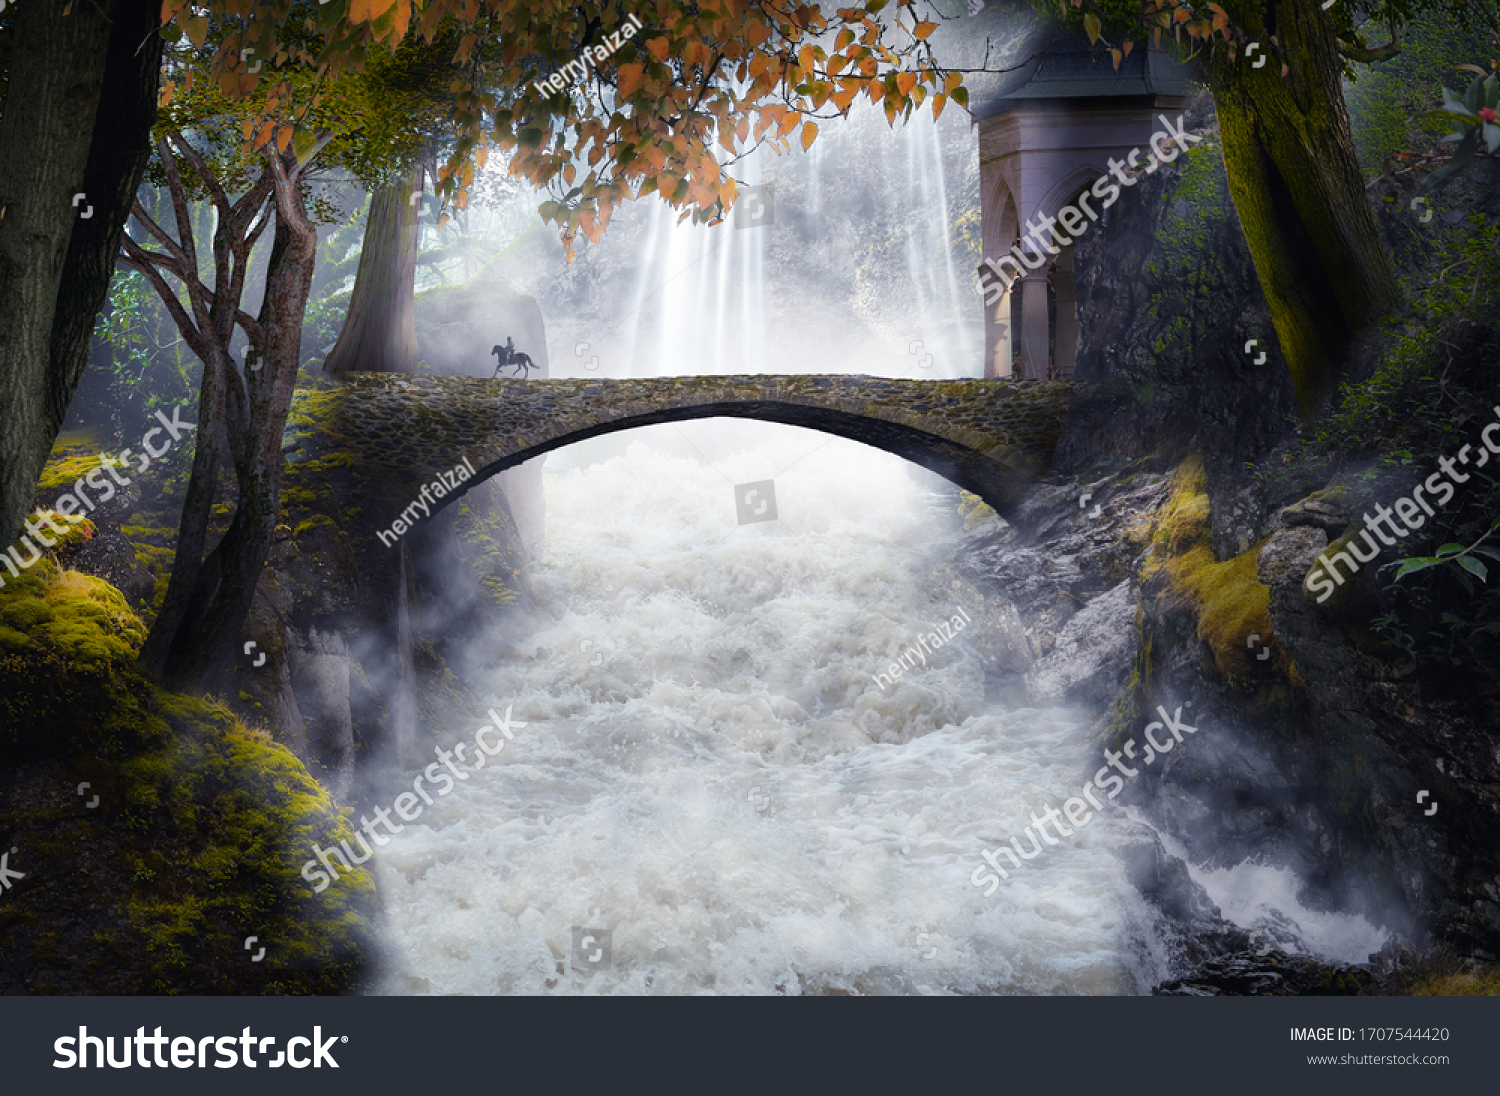 fantasy river with old stone bridge #1707544420